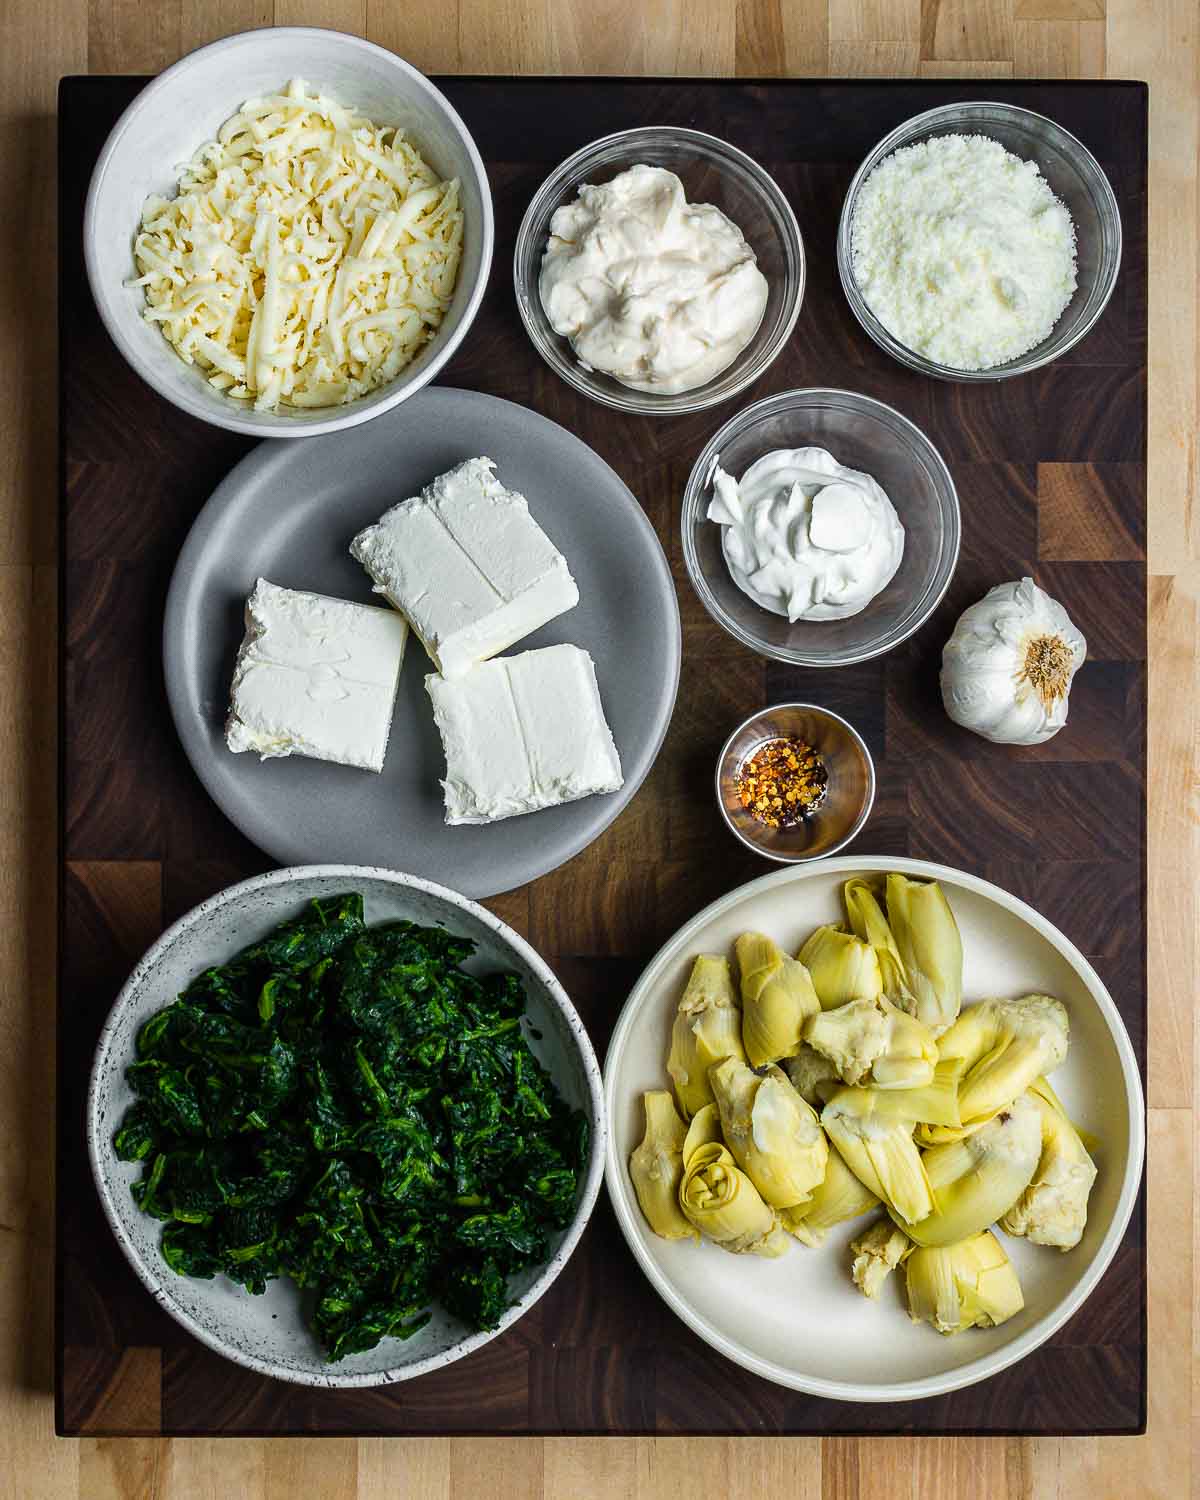 Ingredients shown: mozzarella, mayo, Pecorino, cream cheese, sour cream, hot red pepper flakes, garlic, spinach, and artichoke hearts.